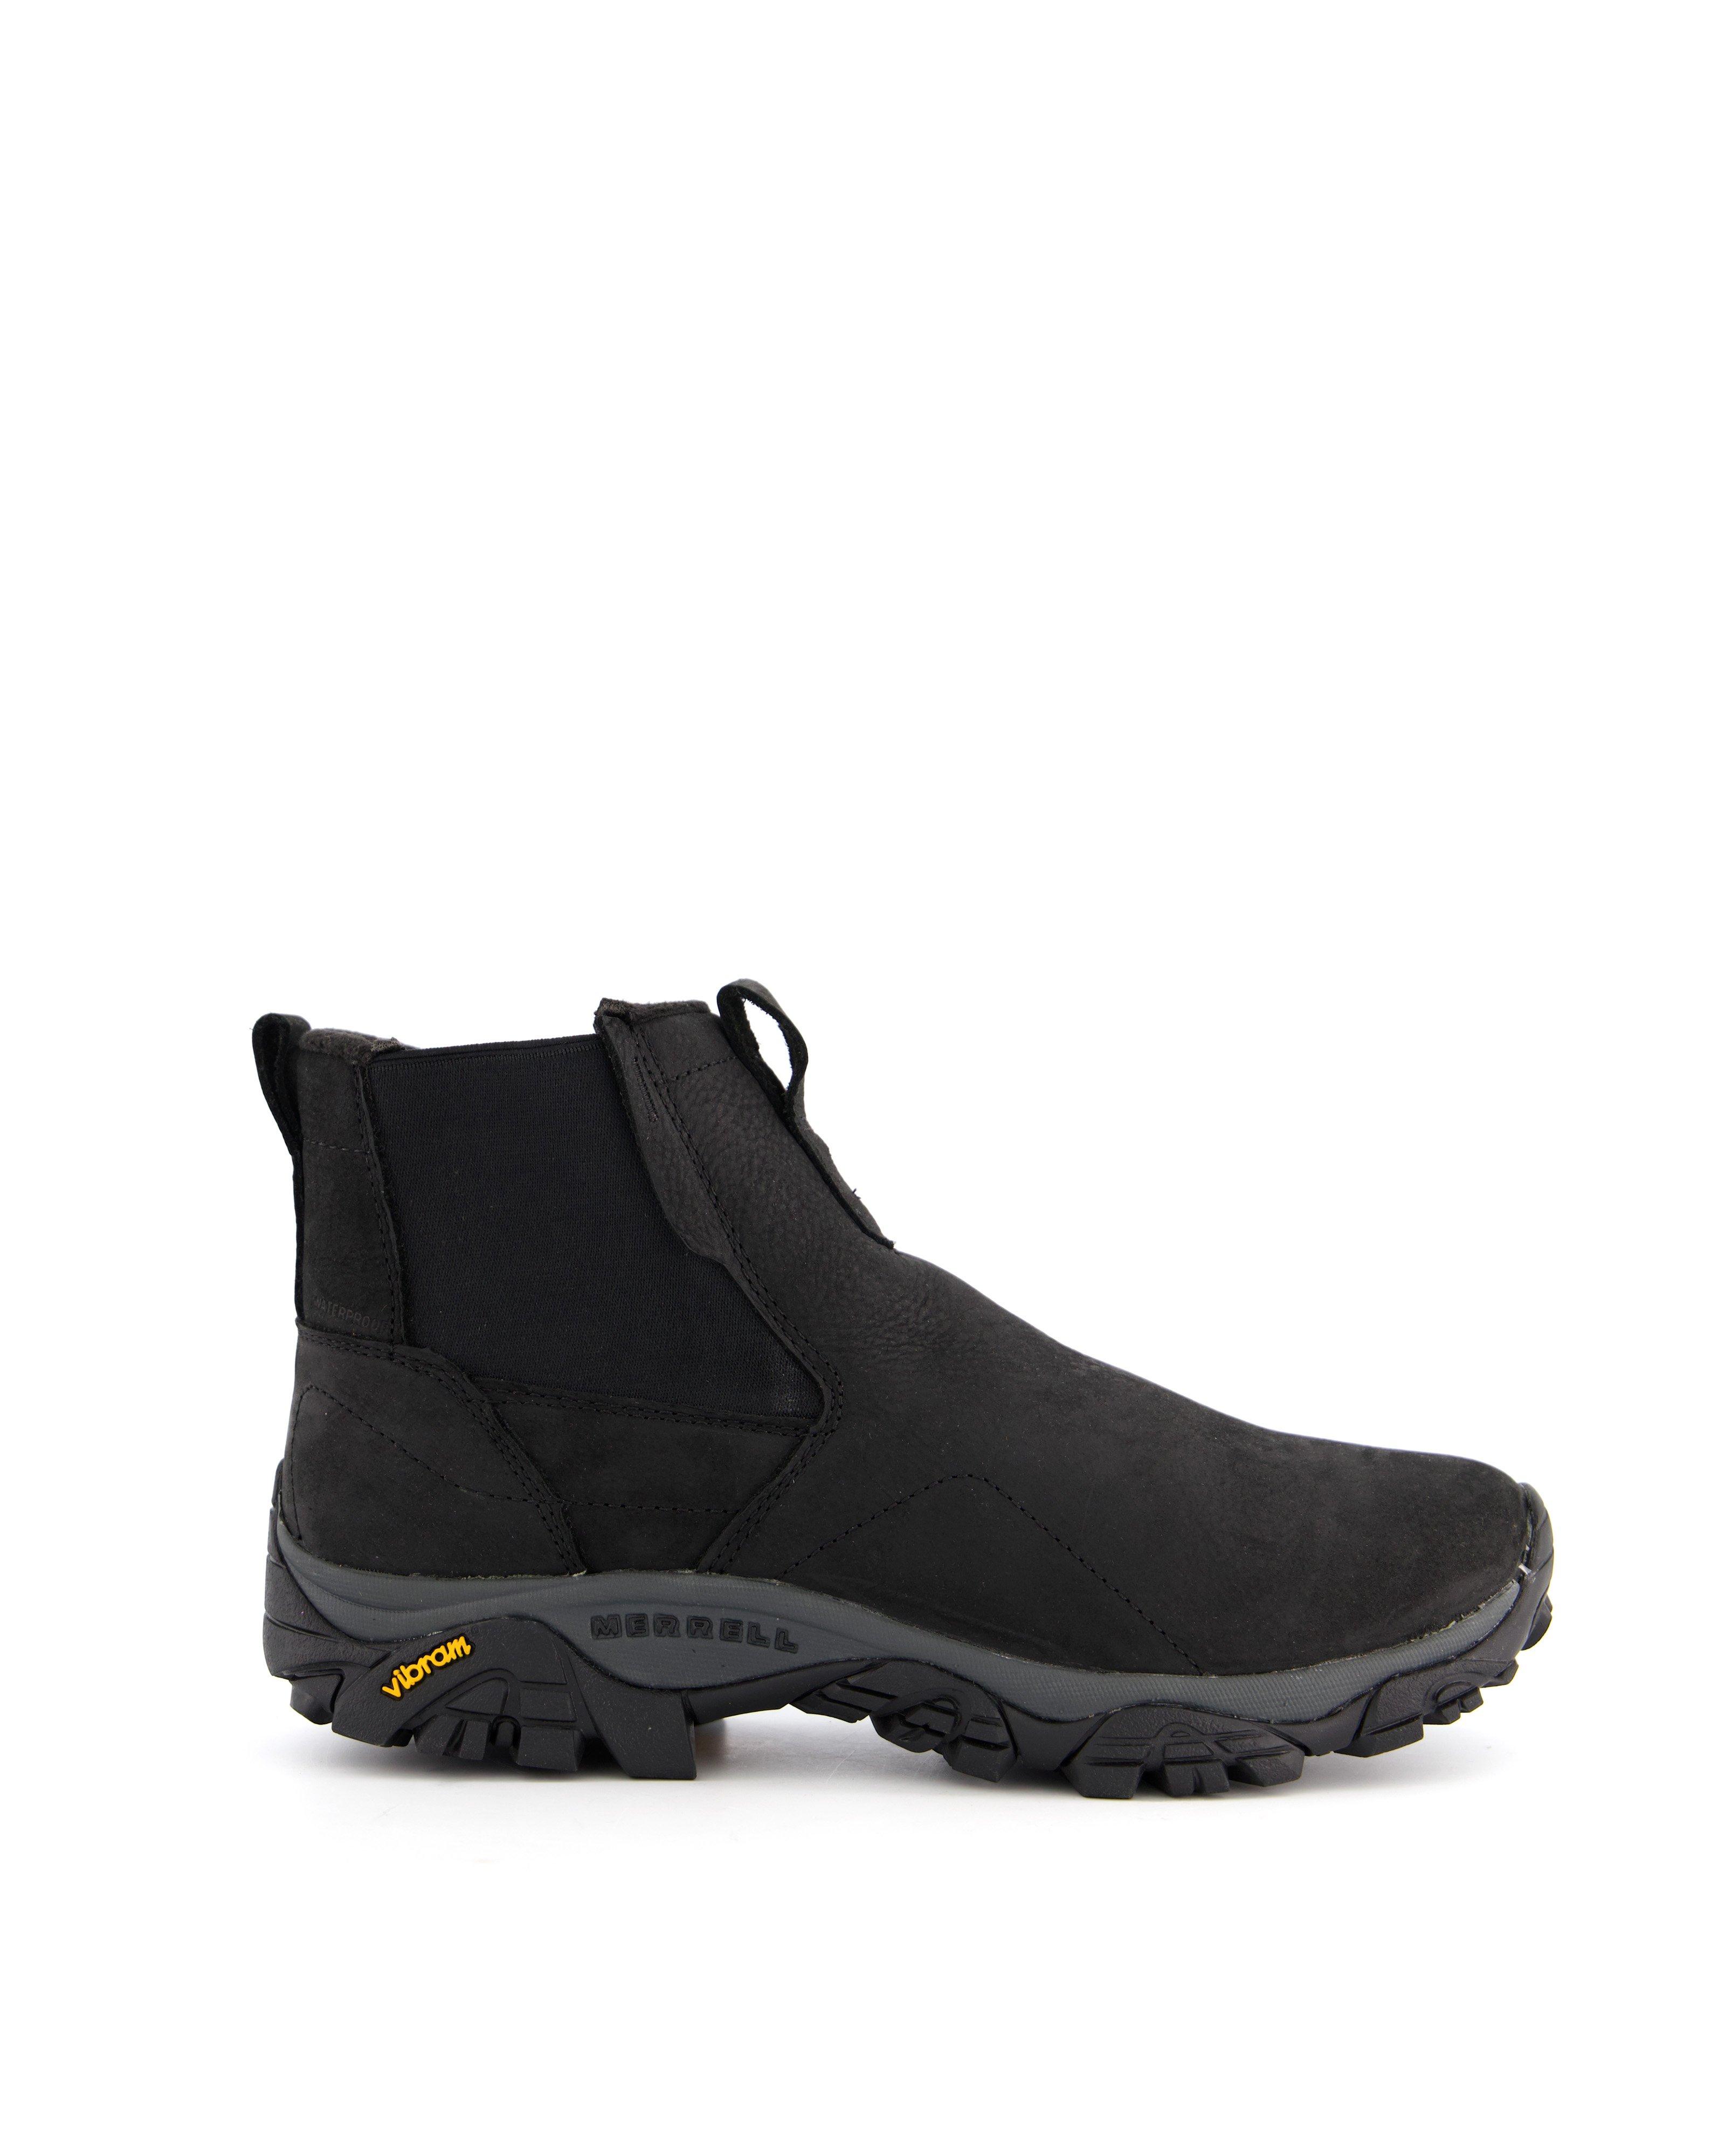 Merrell Men’s Moab Adventure 3 Waterproof Shoes | Cape Union Mart